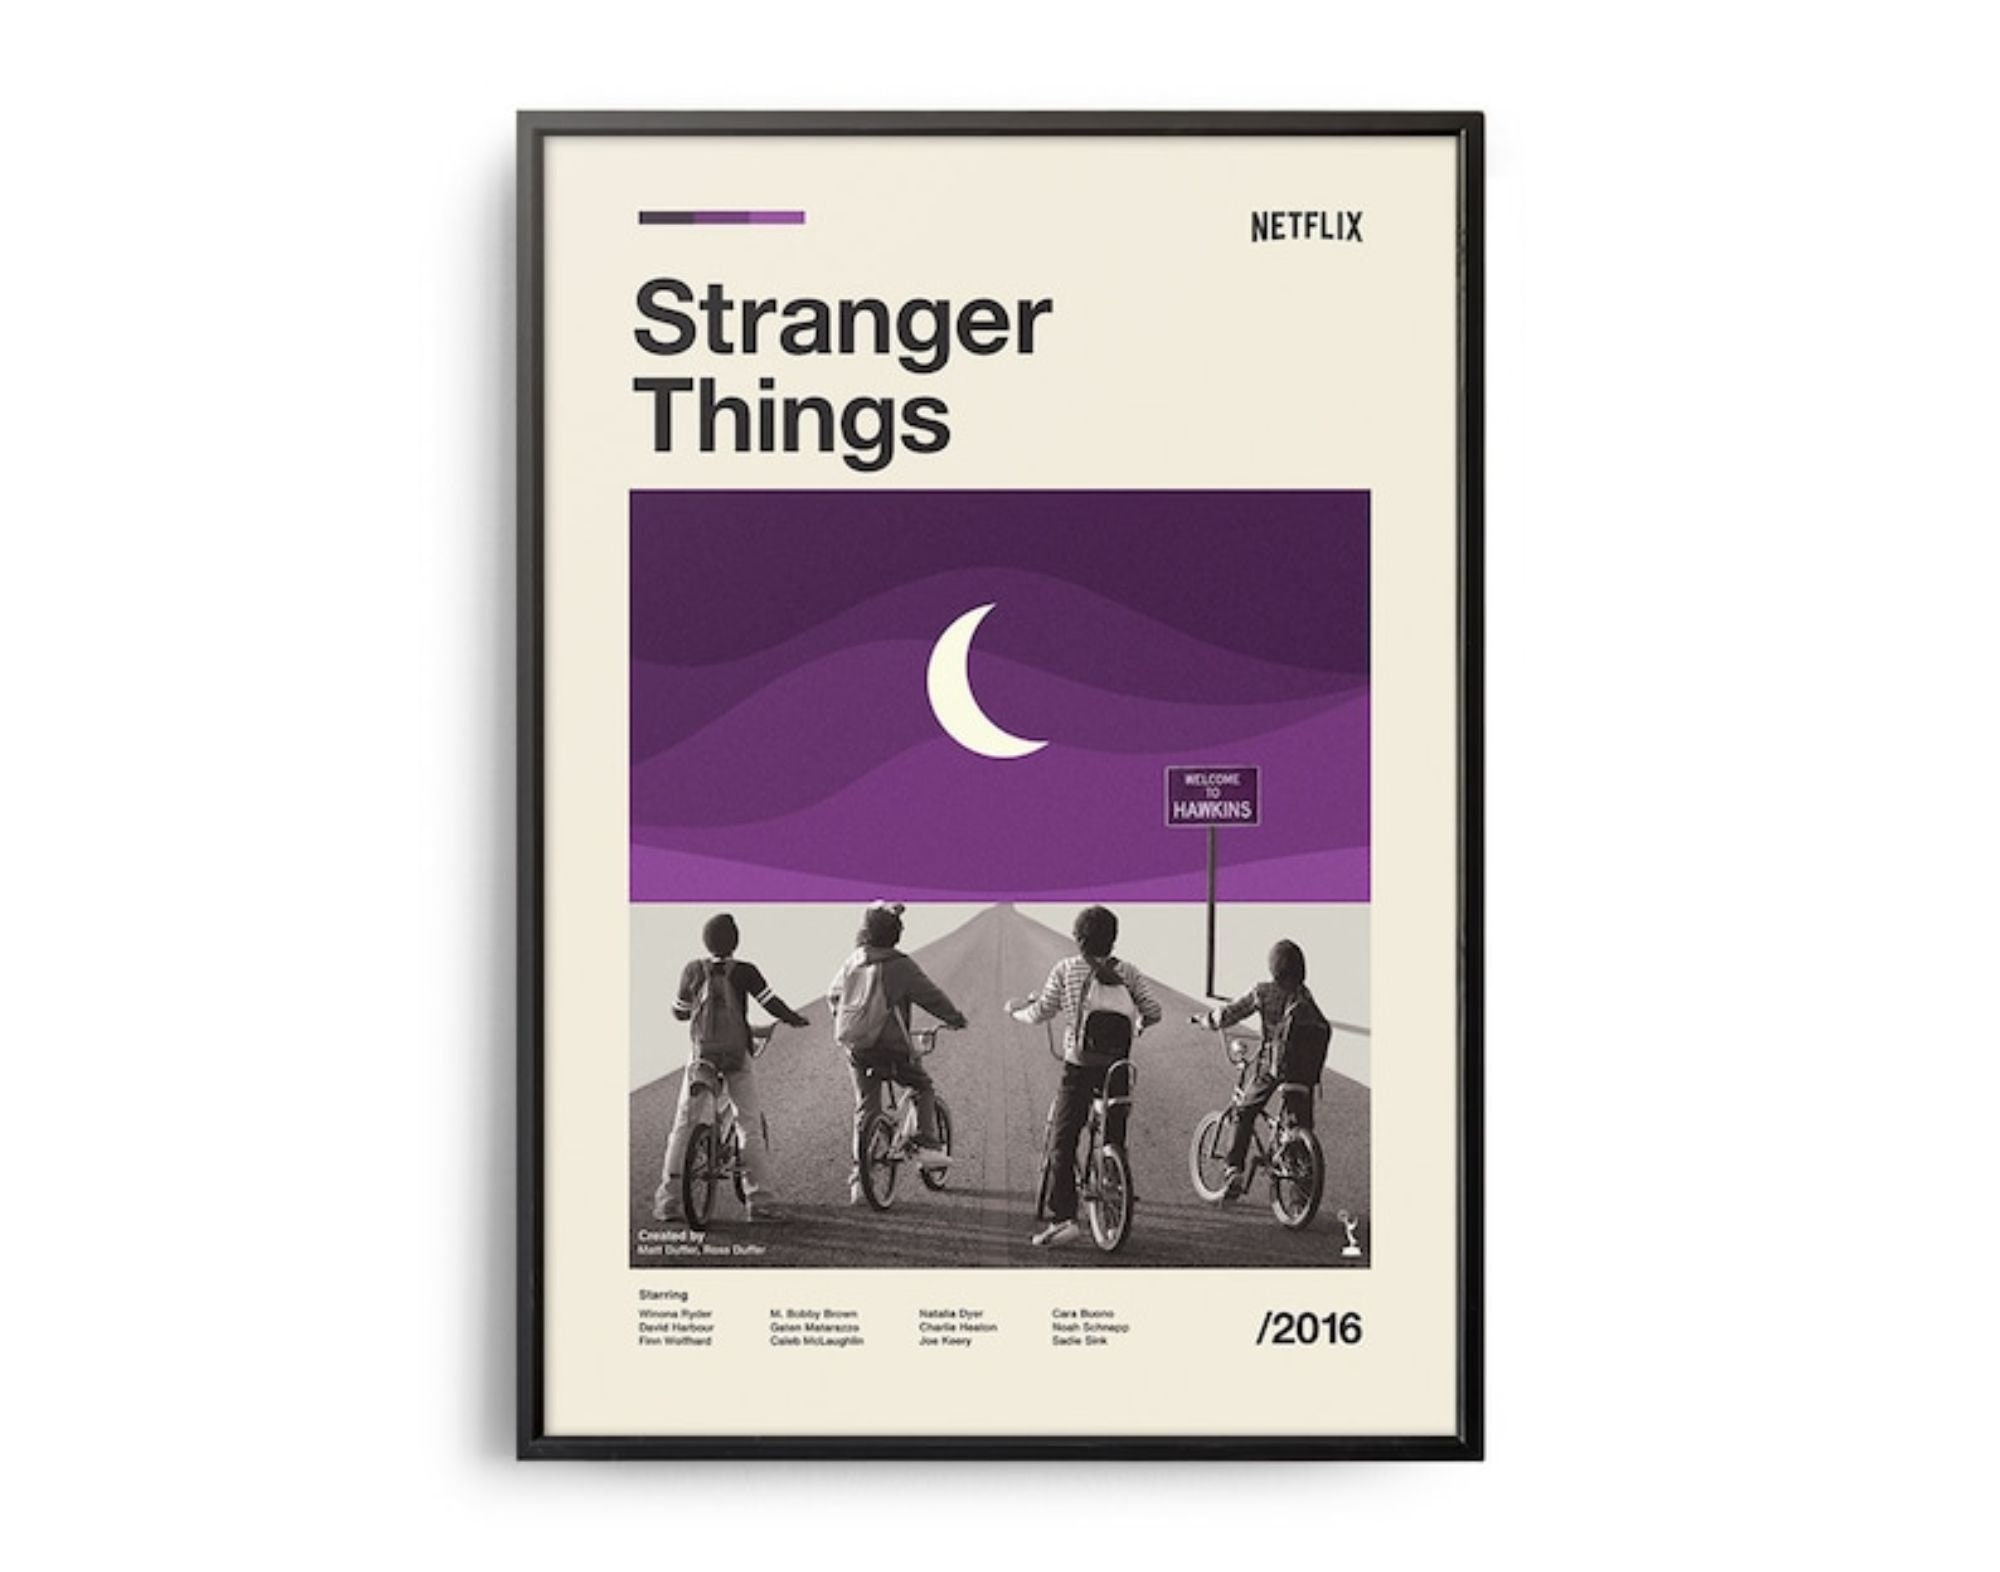 Stranger things vintage inspired movie print retro movie poster midcentury modern retro tv show poster